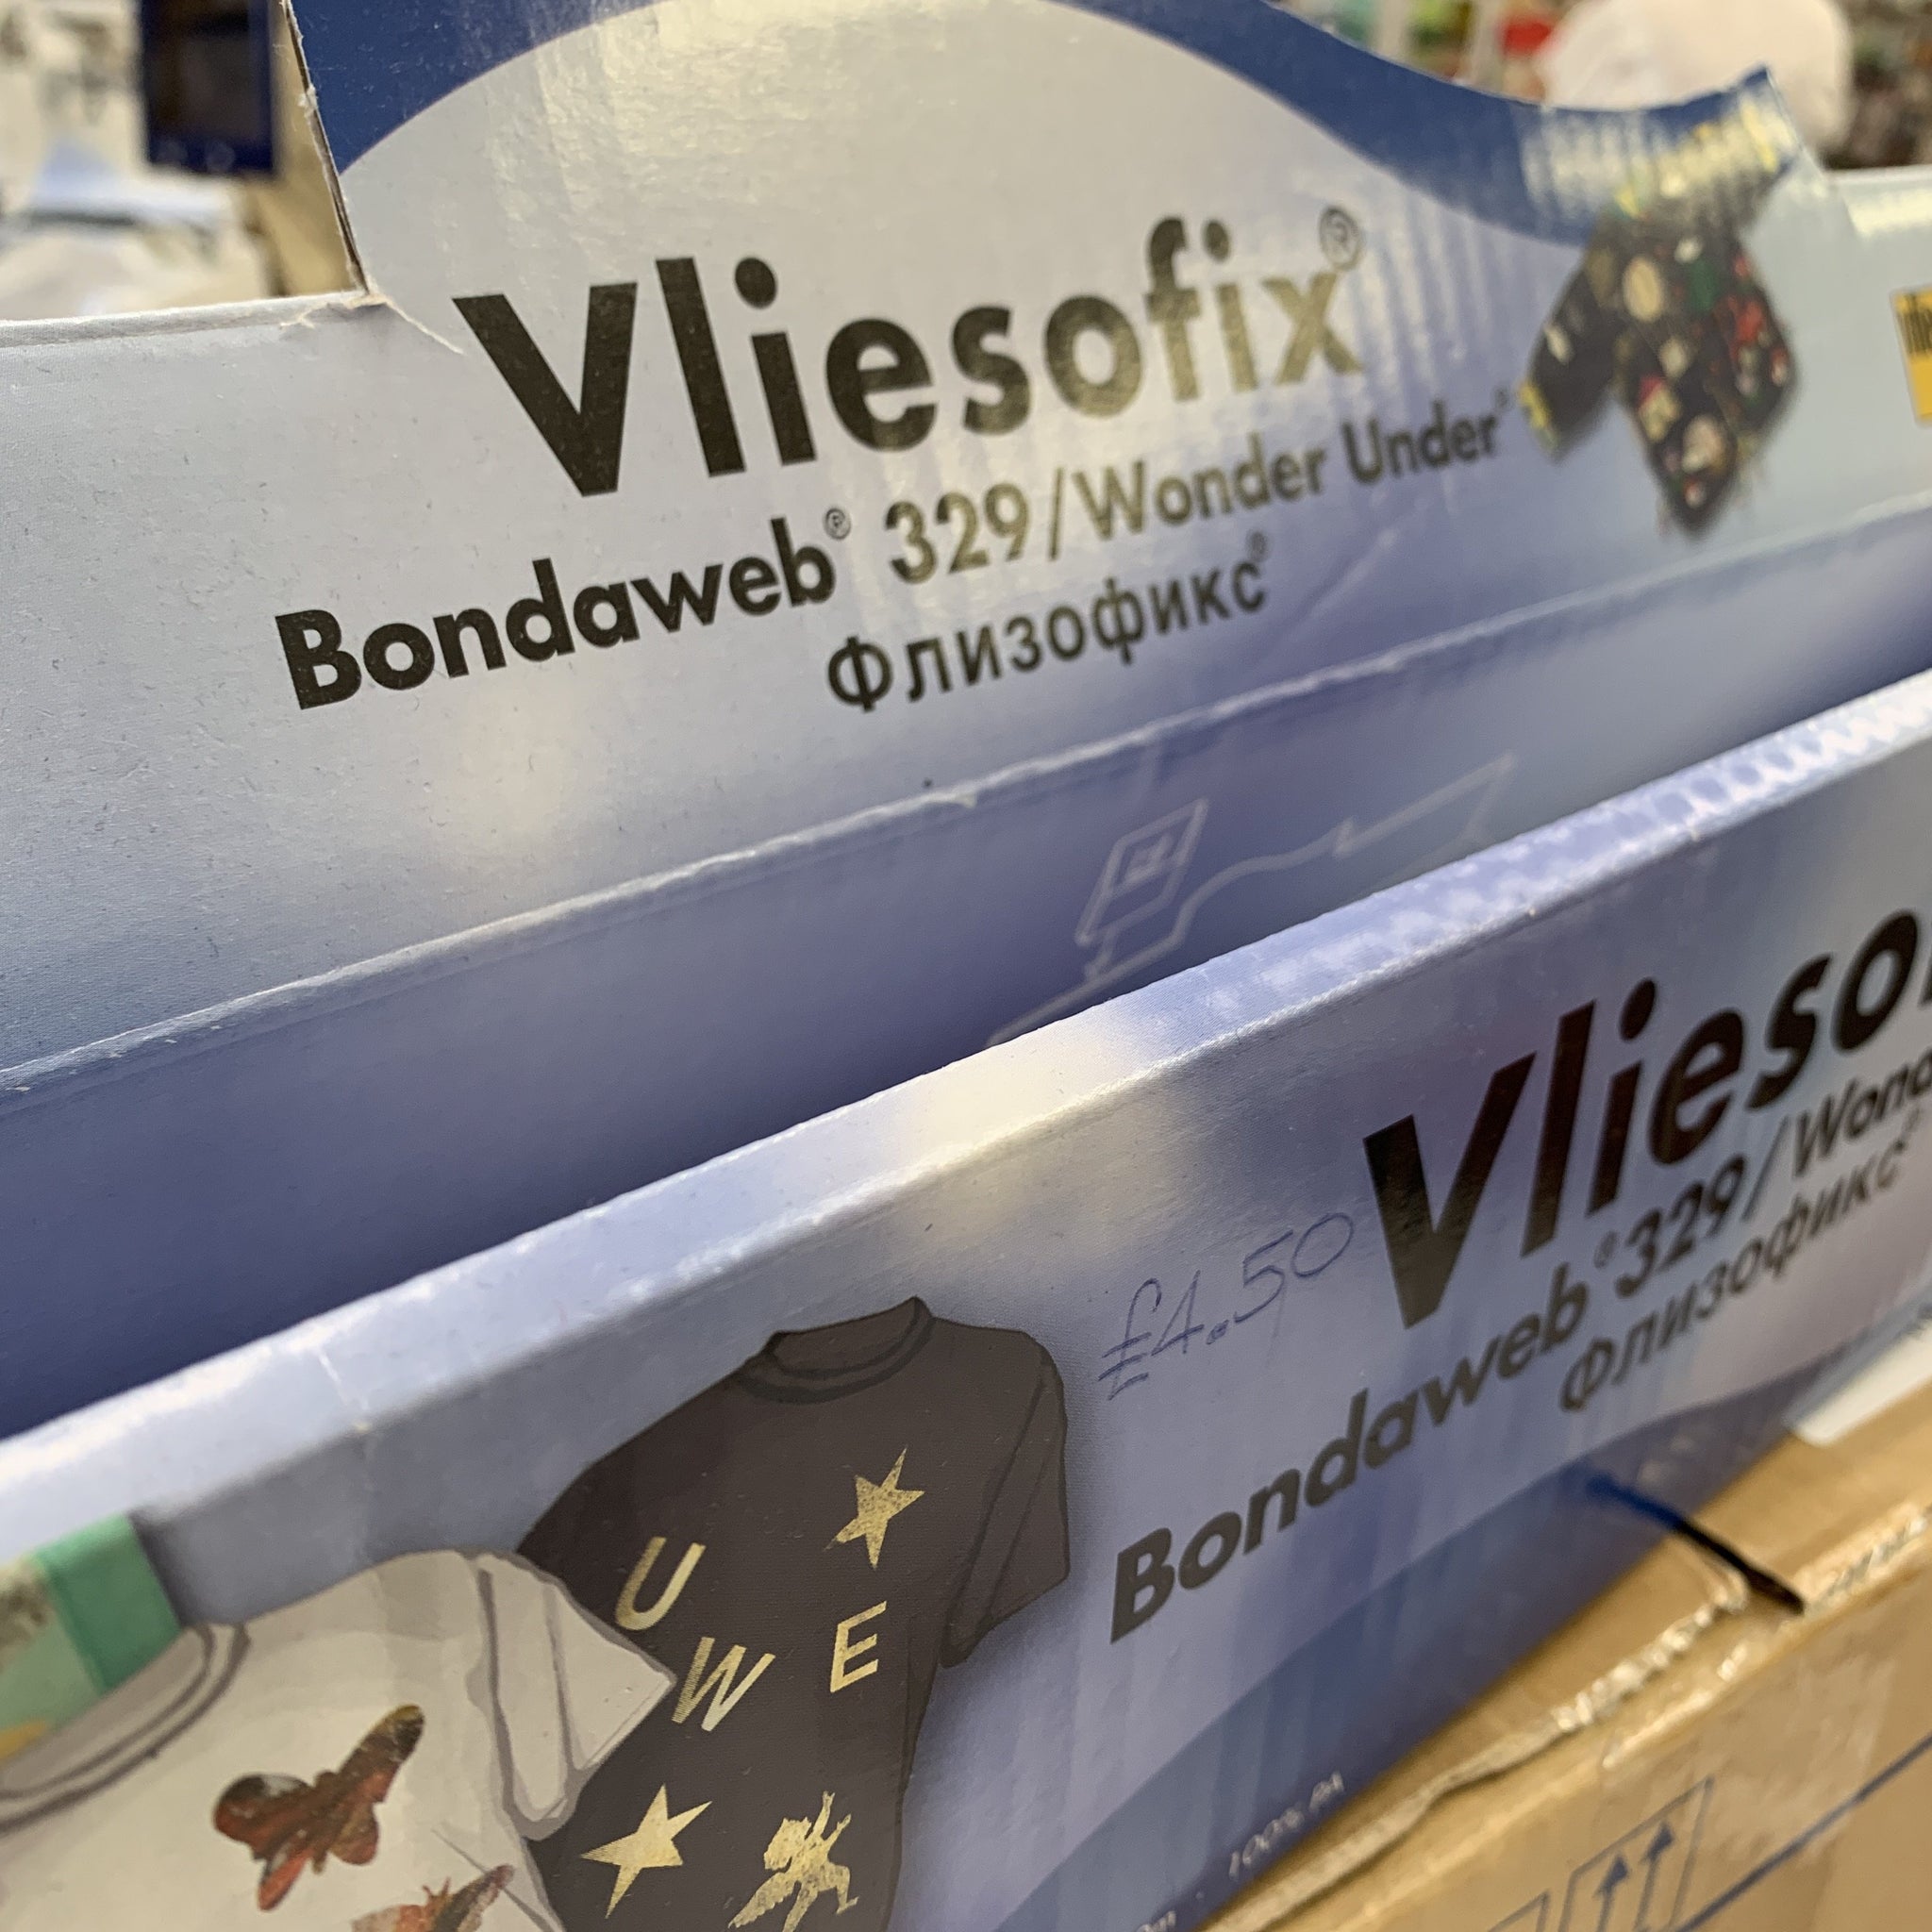 Vilene bondaweb 329 for Appleque - Vlisofix - Wonder Under-Stabilizer-Vlieseline-Fabric Mouse